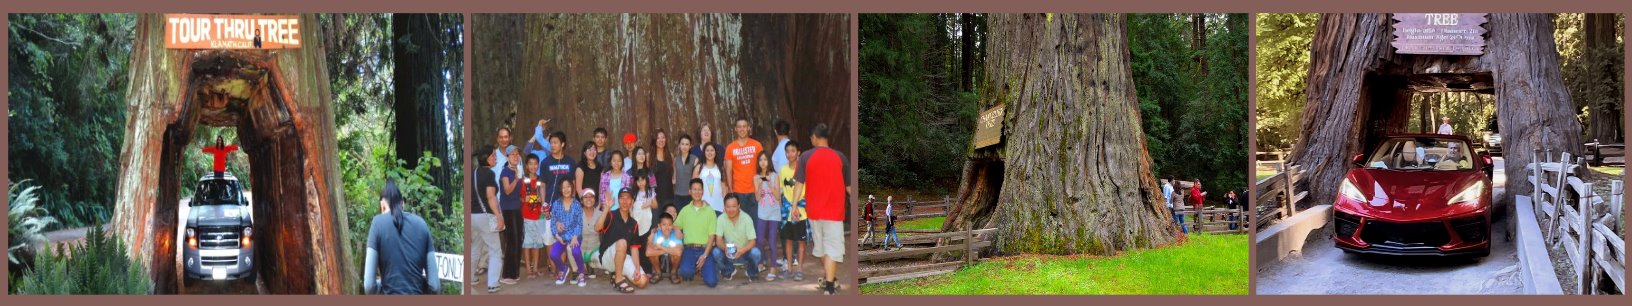 Redwood-national-park SightSeeing-Tours-hiking